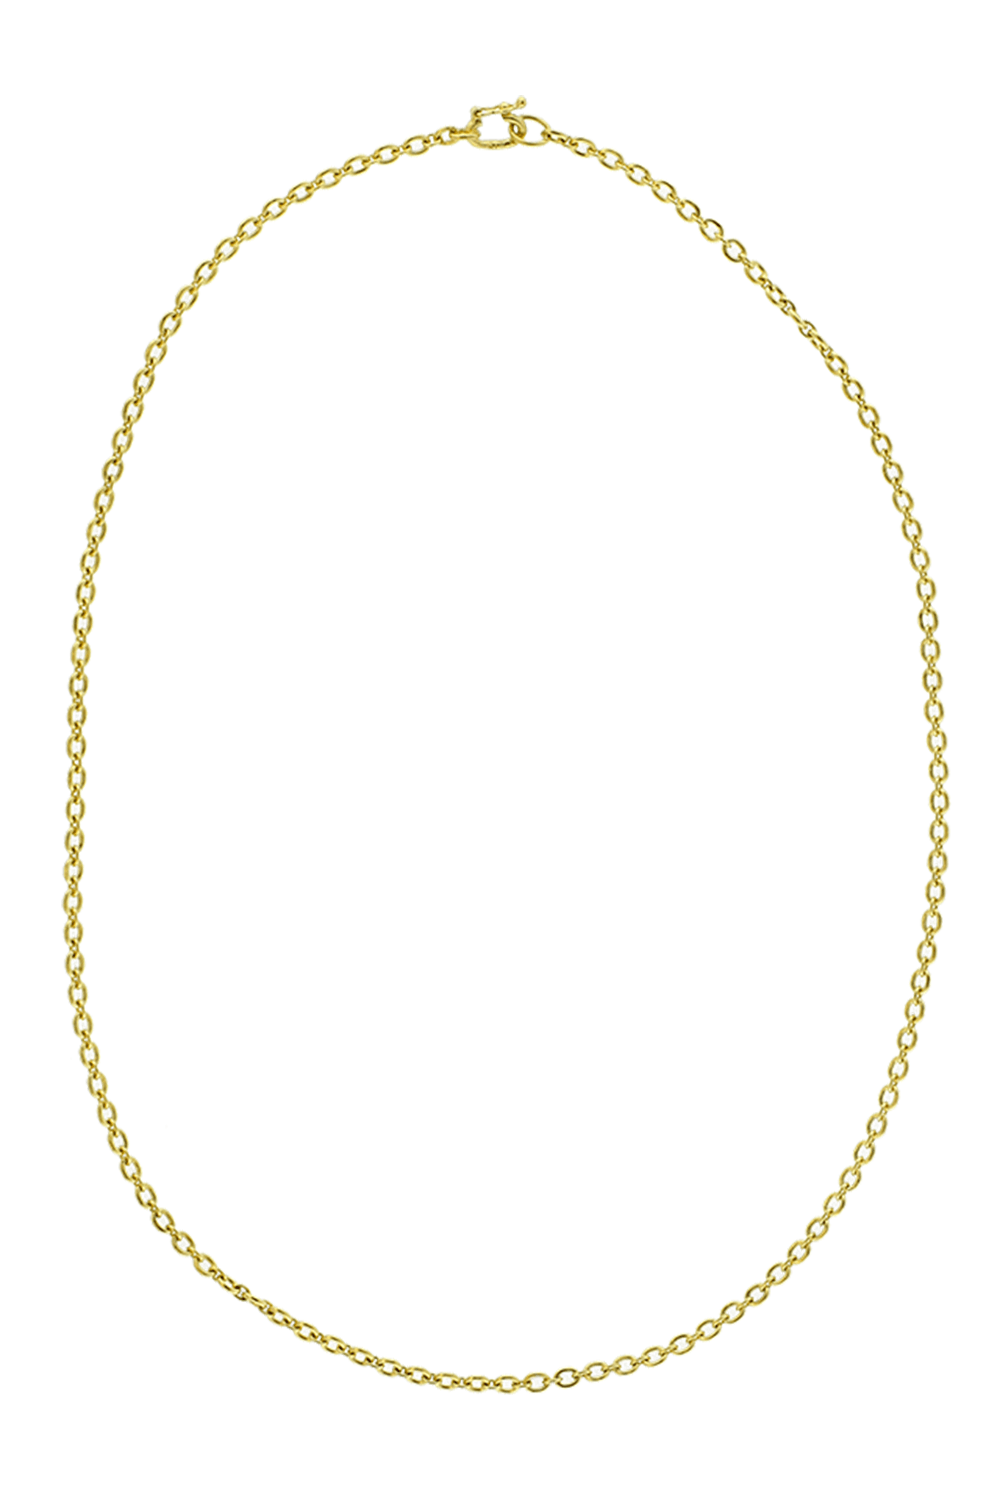 IRENE NEUWIRTH JEWELRY-Chain Necklace-YELLOW GOLD